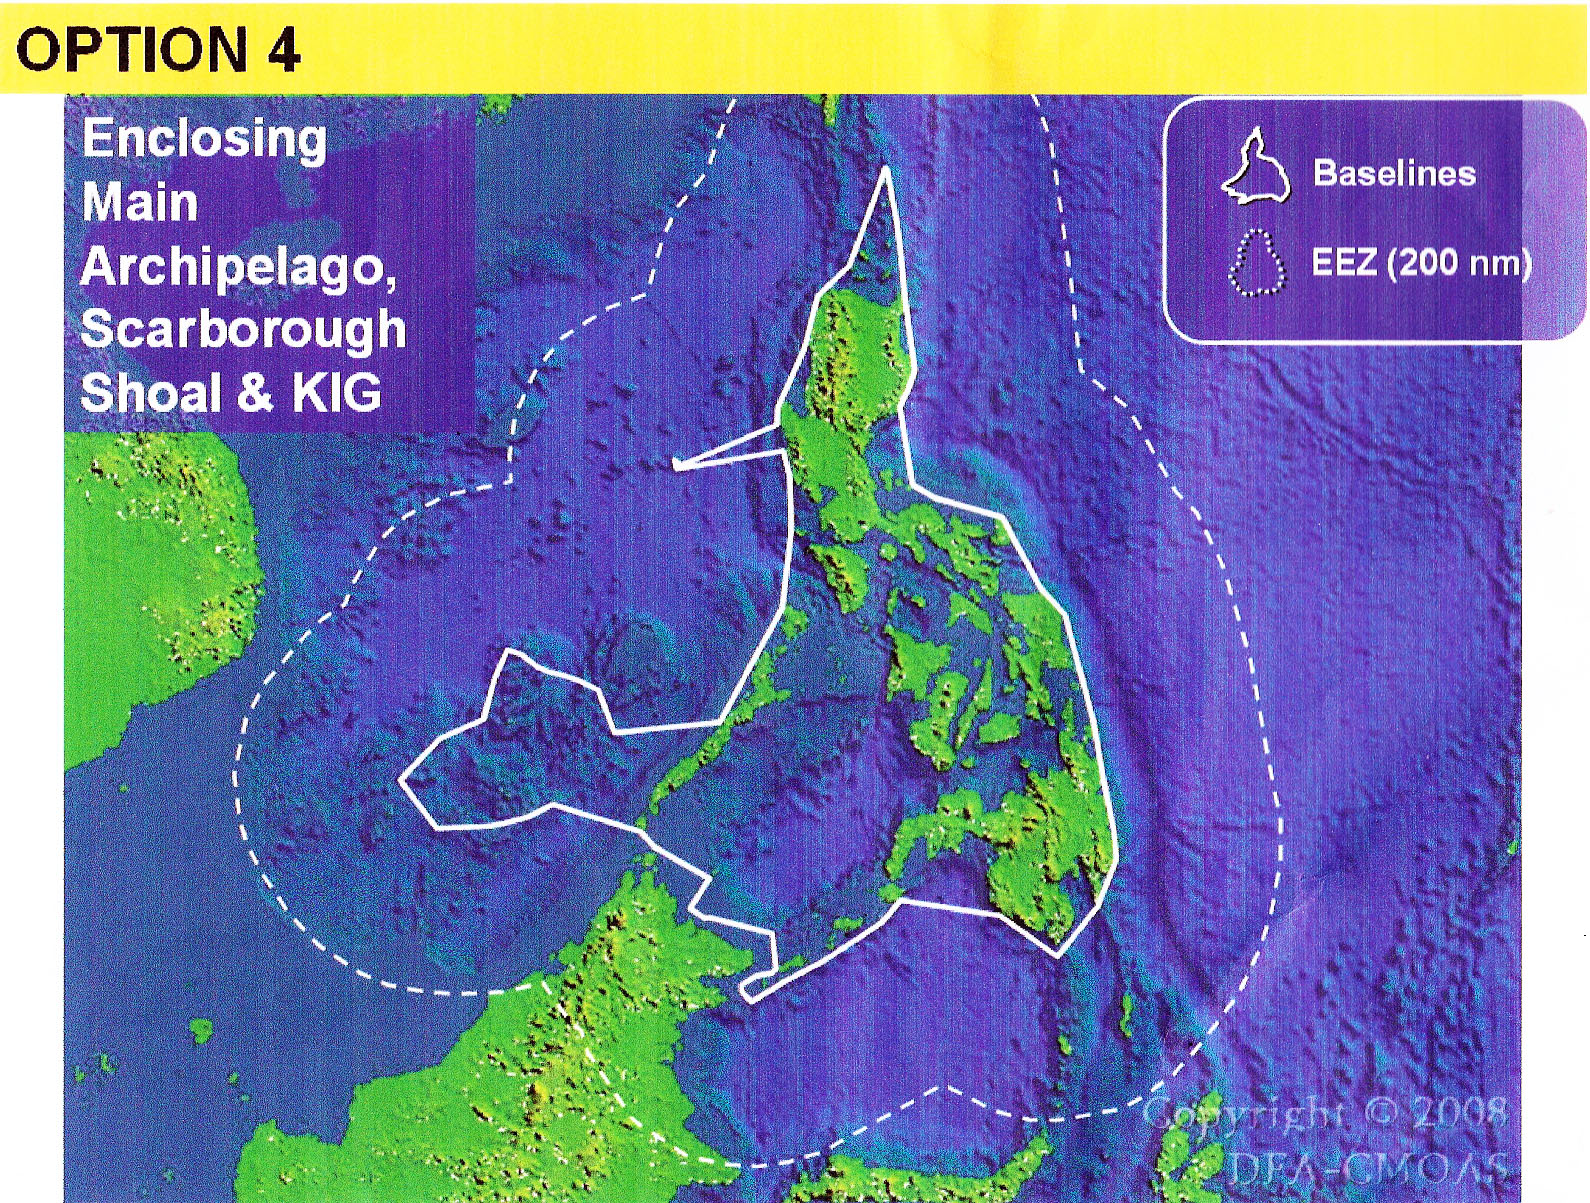 HB3216's archipelagic baselines